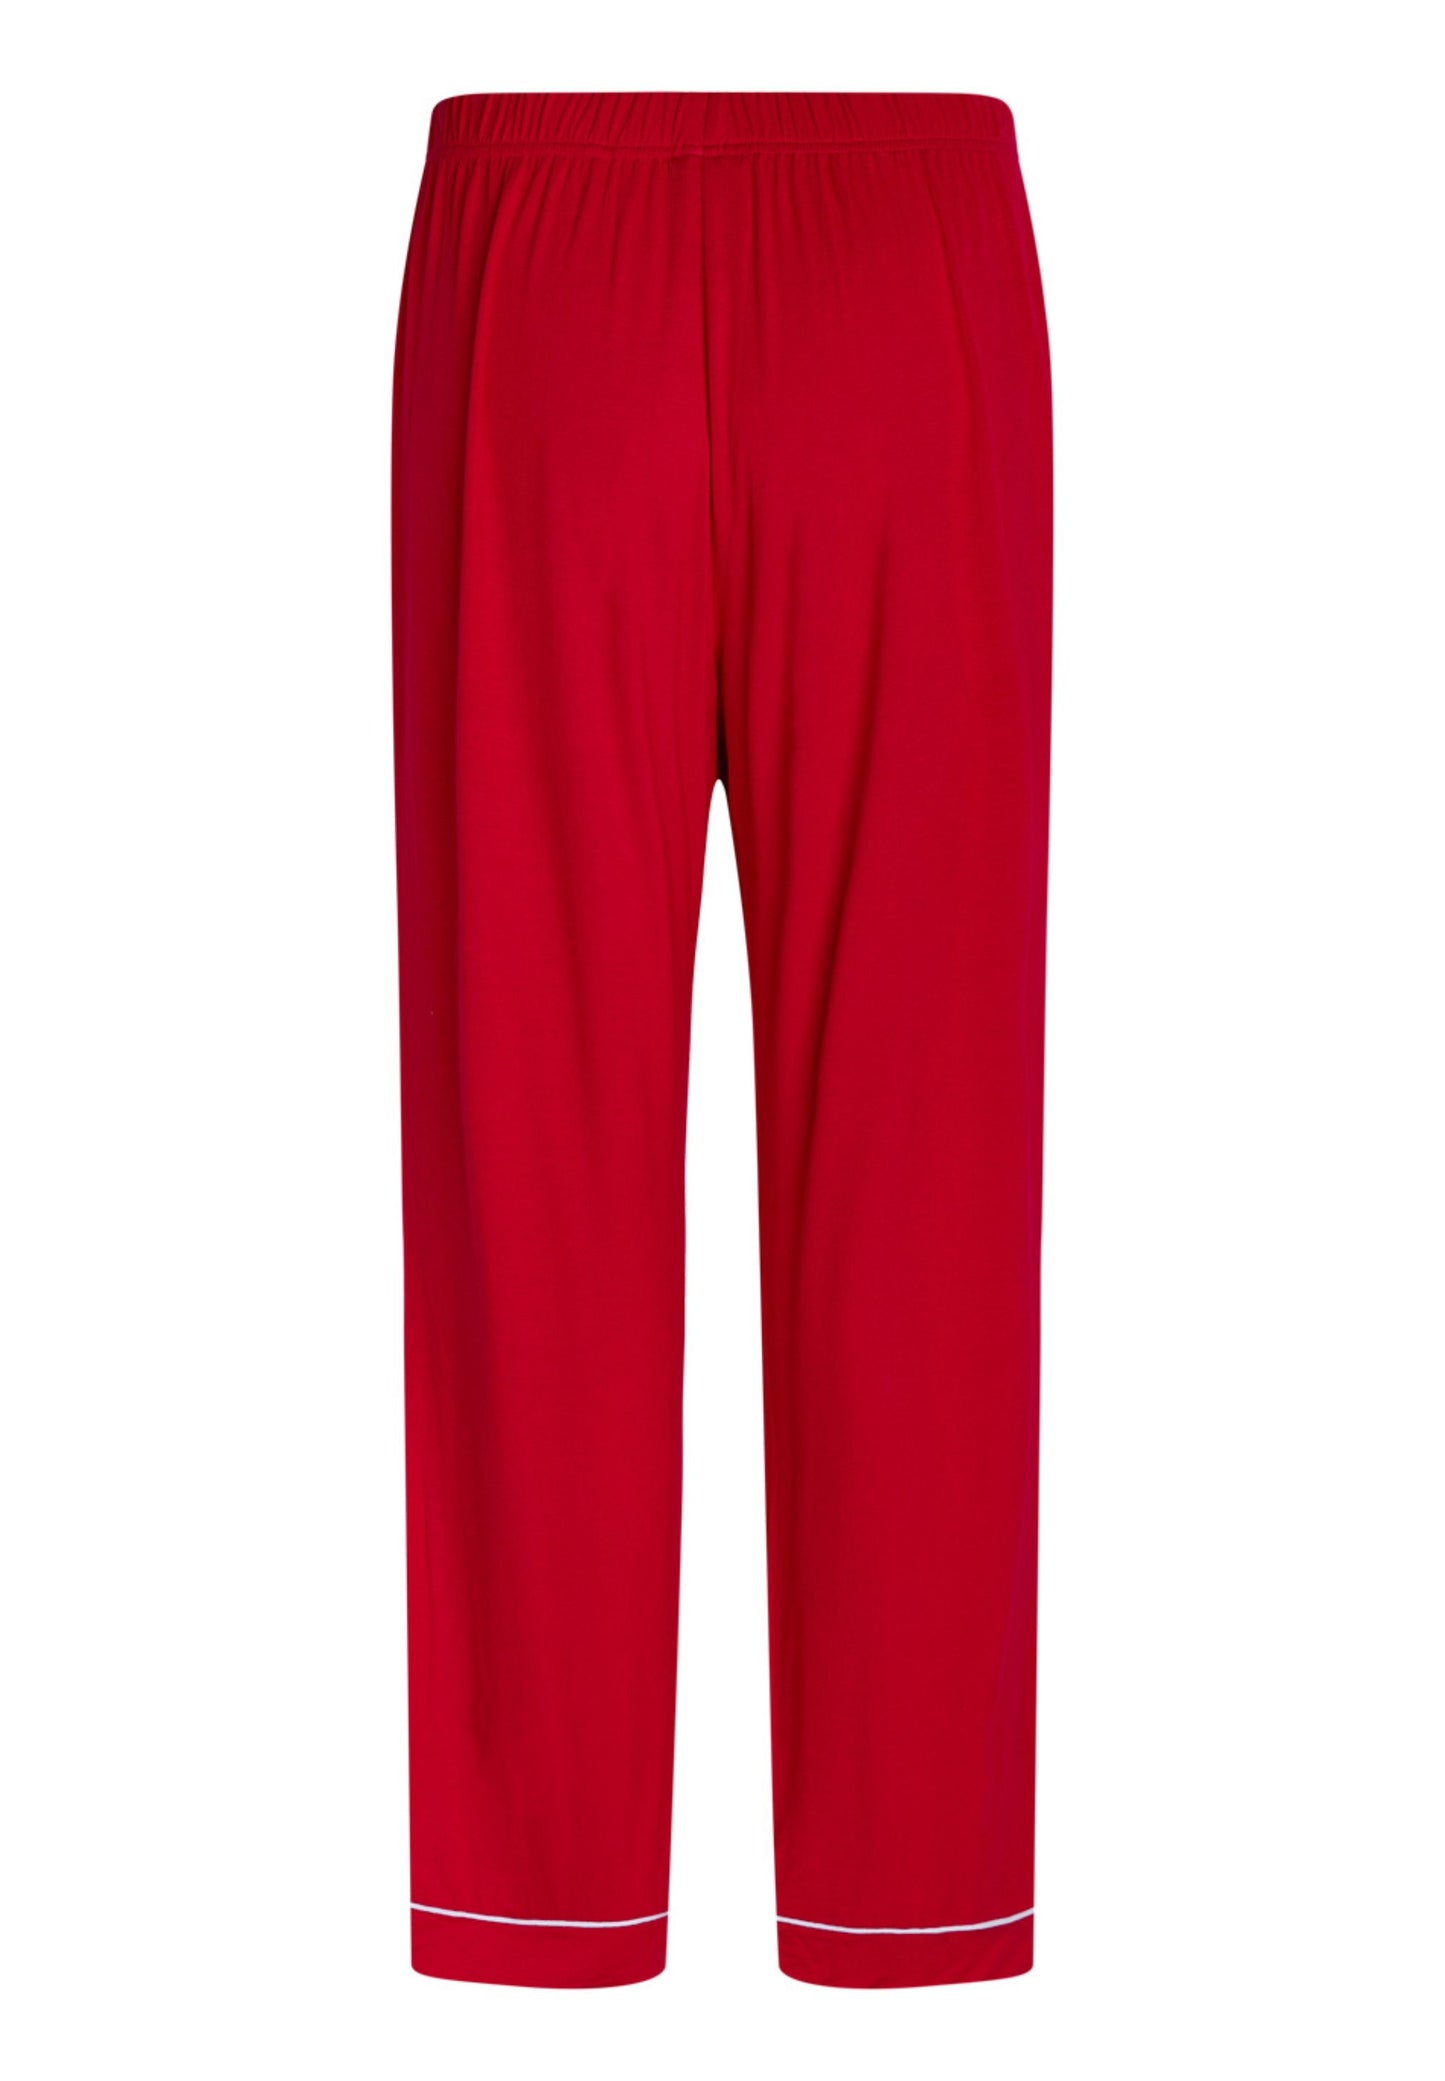 Joy Pyjamasbukser Tango Red